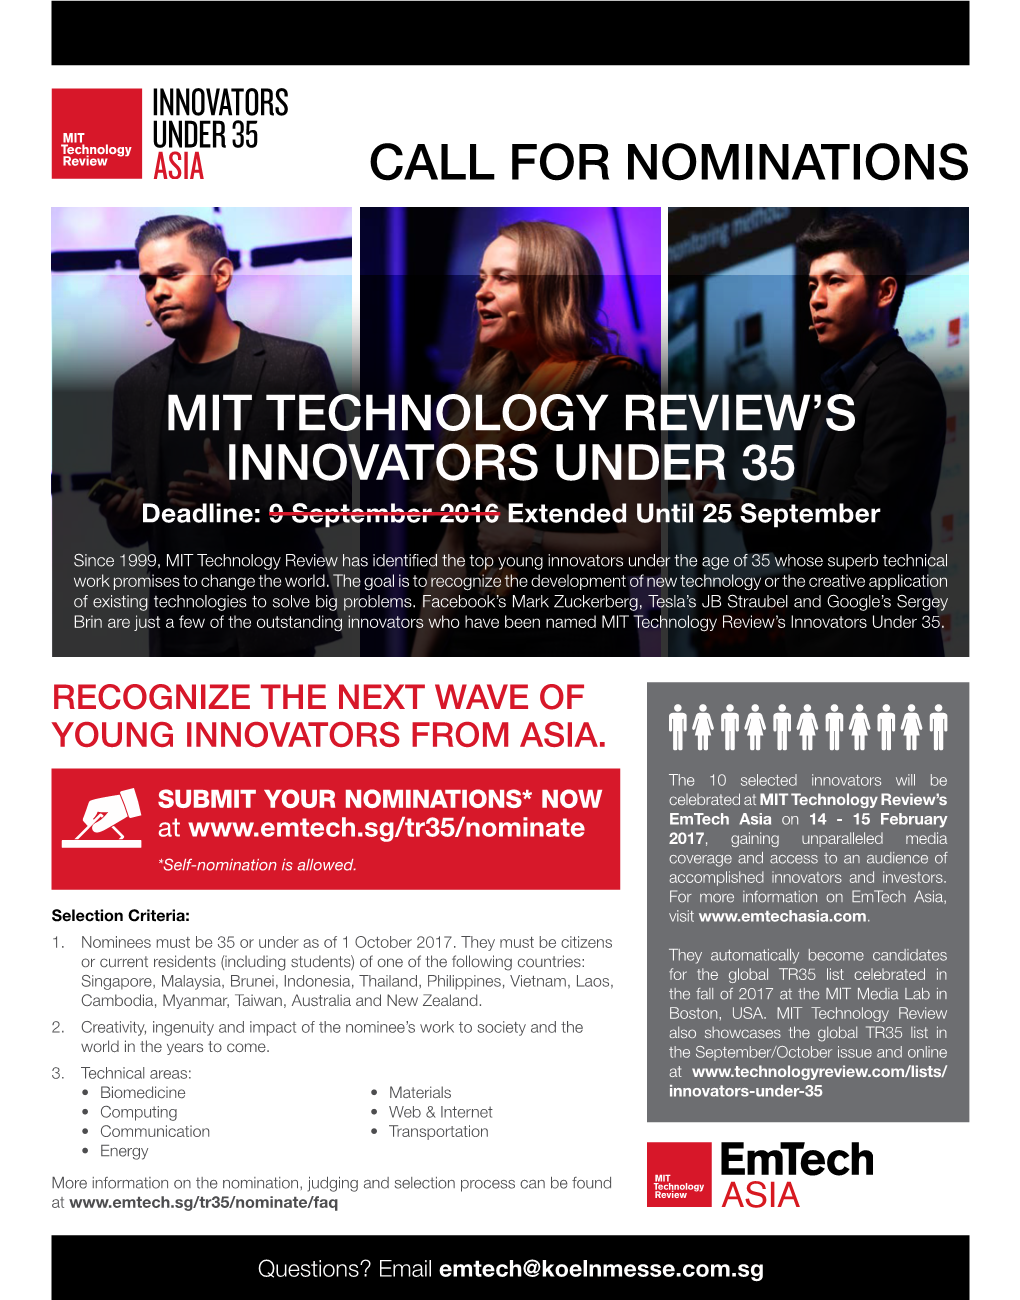 Mit Technology Review's Innovators Under 35